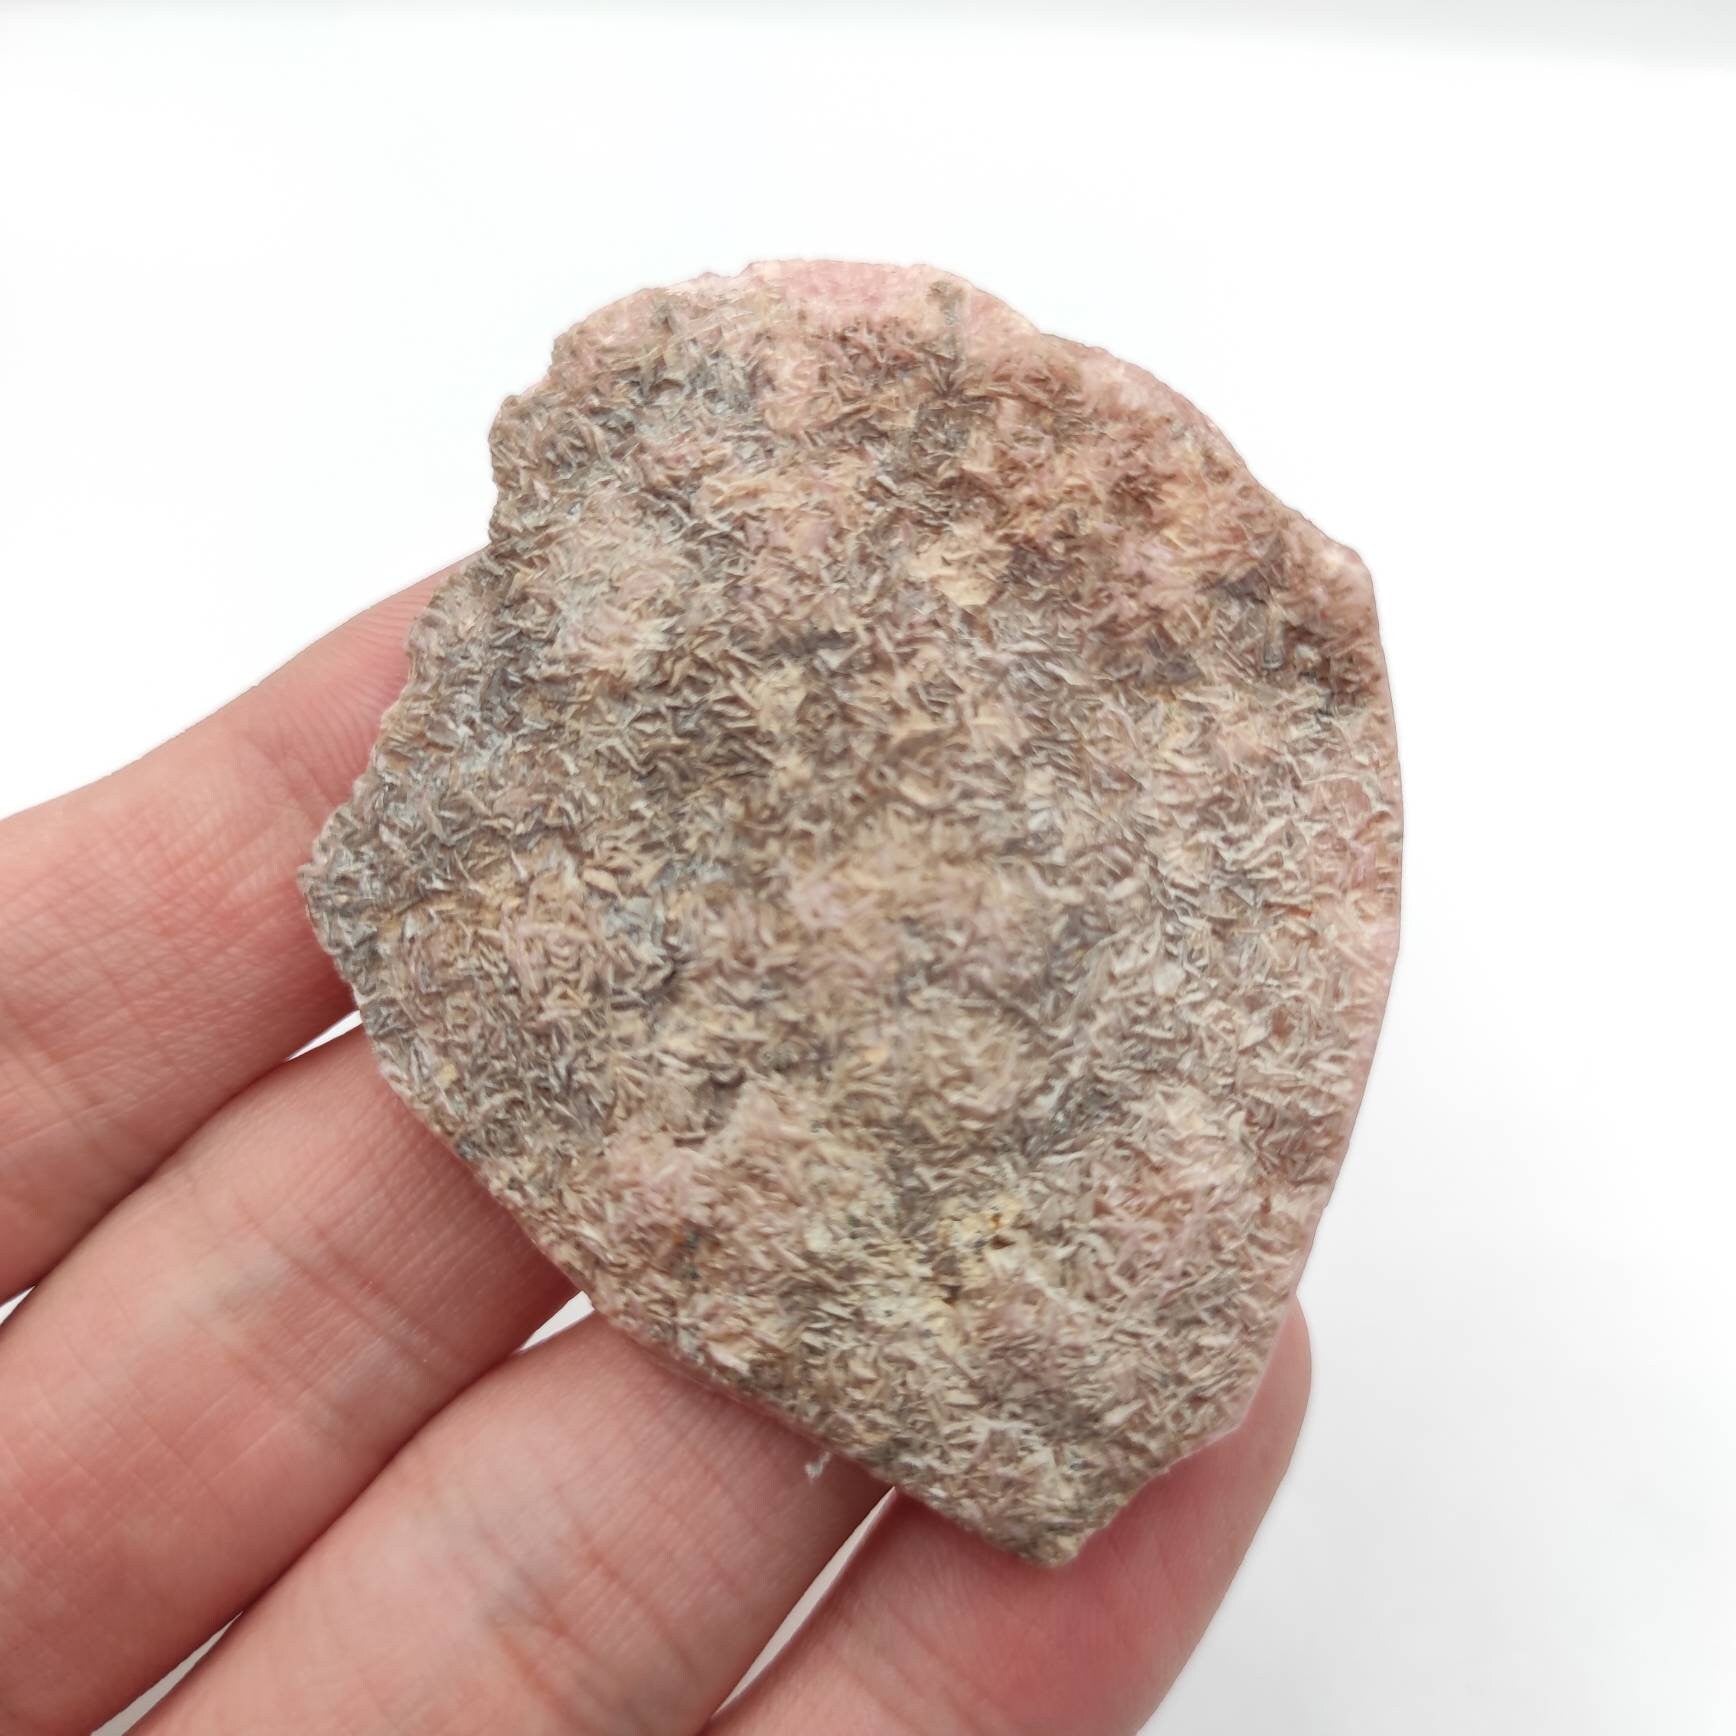 23g Rhodochrosite Slab from Argentina - Natural Pink Red Rhodochrosite - Andalgala, Catamarca, Argentina - Polished Rhodochrosite Crystal